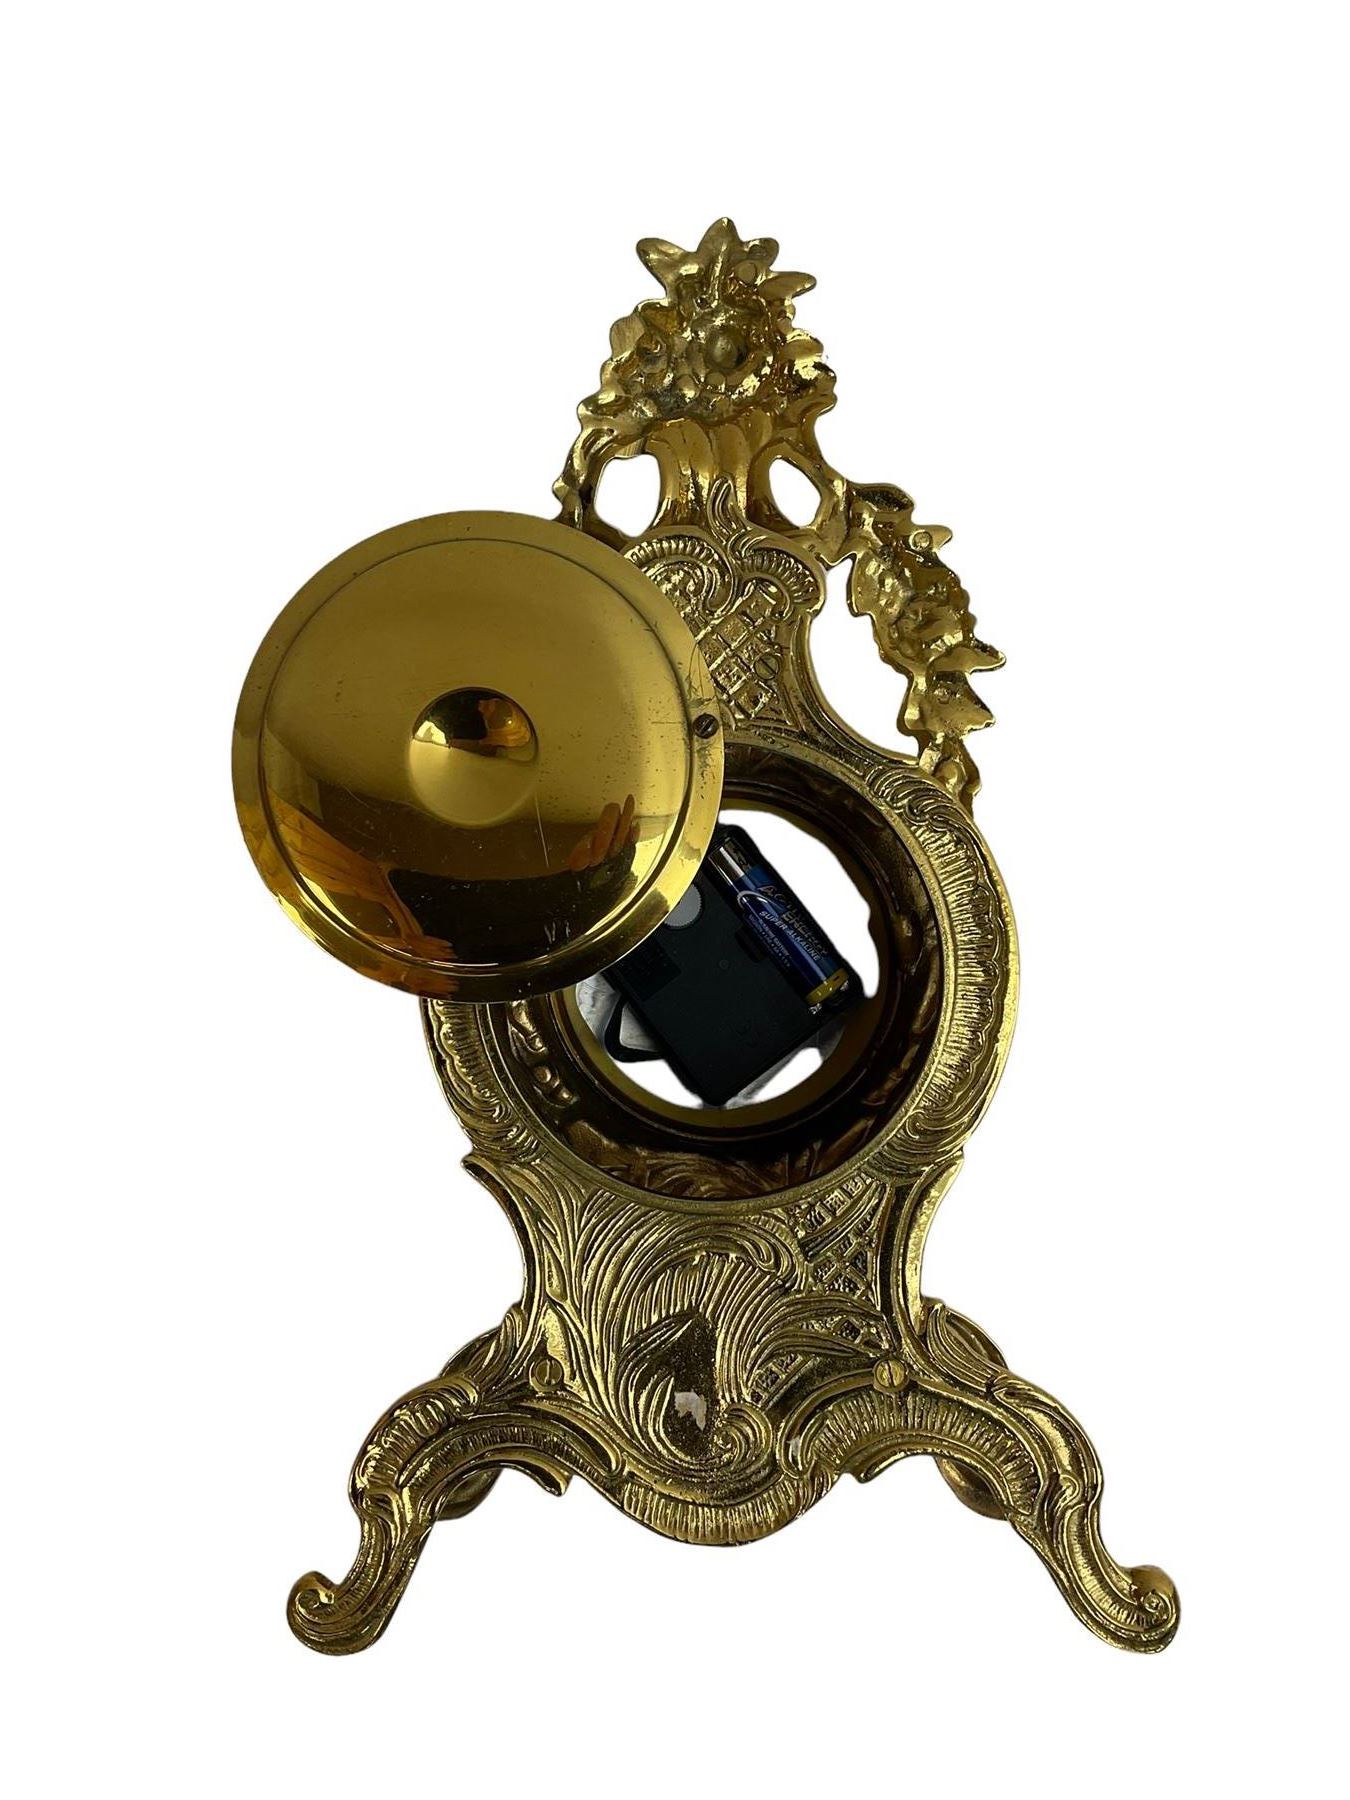 20th century gilt metal timepiece mantle clock with a Quartz movement - Image 3 of 3